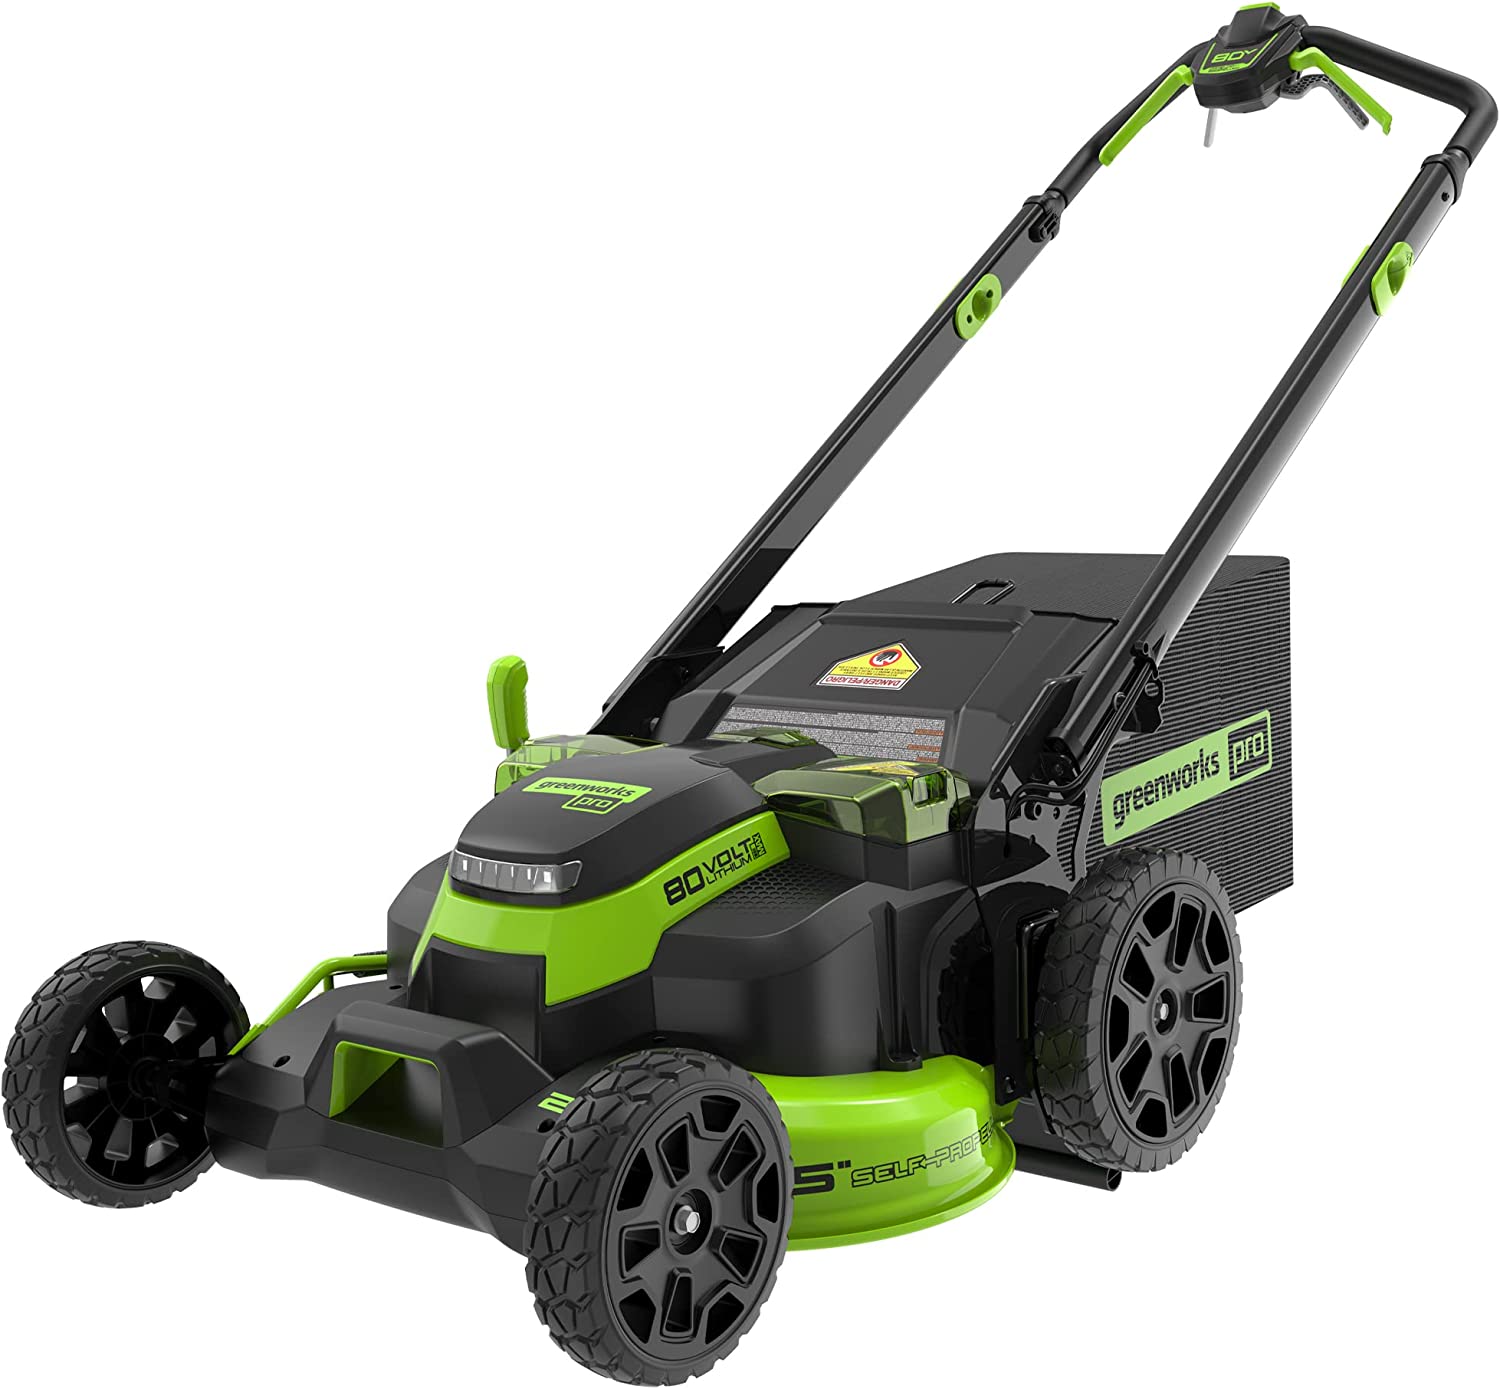 Greenworks announces new battery-powered mowers and handheld equipment